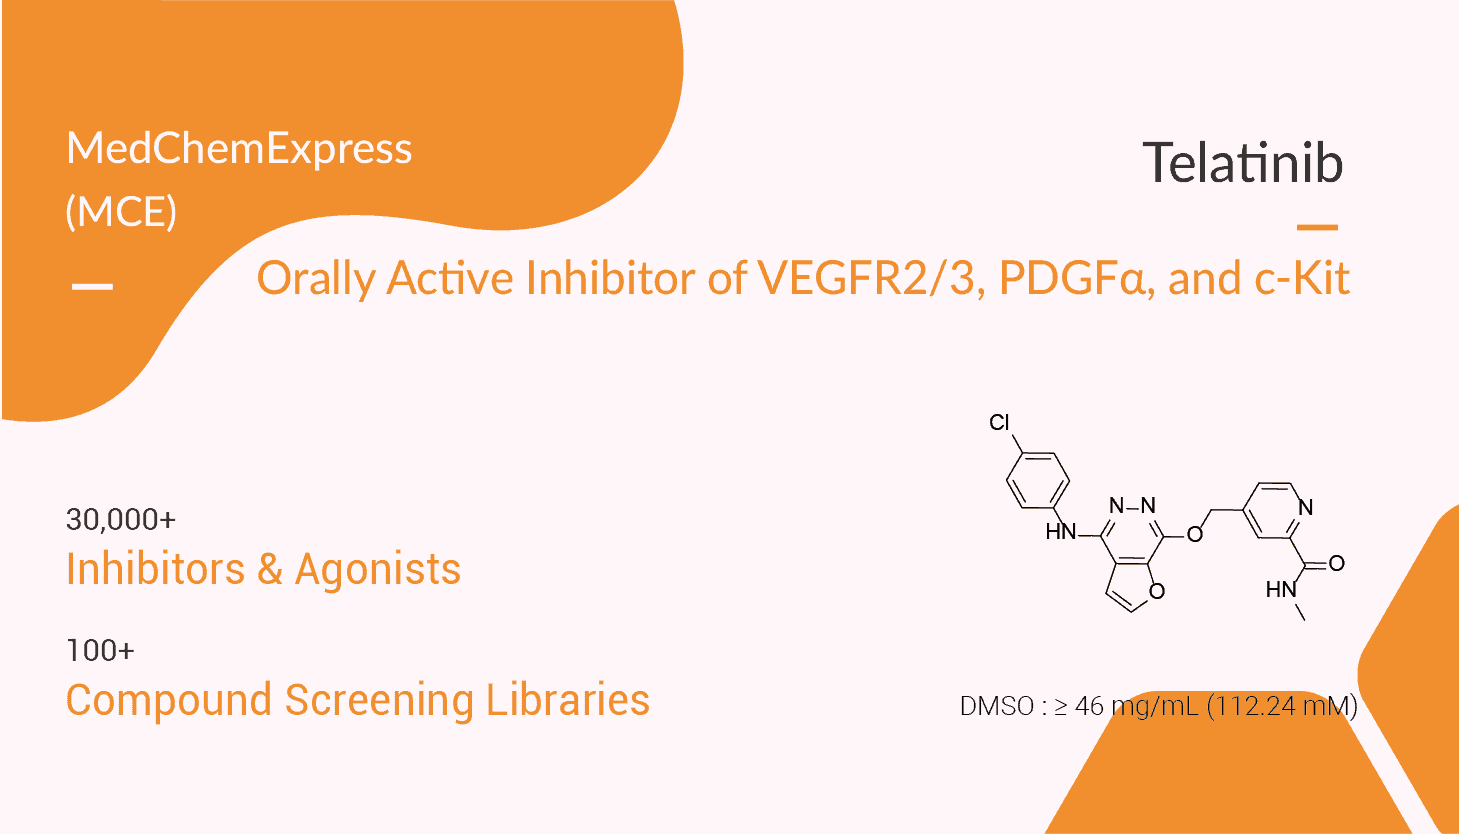 Telatinib 02 - Telatinib is an Orally Active Inhibitor of VEGFR2, VEGFR3, PDGFα, and c-Kit